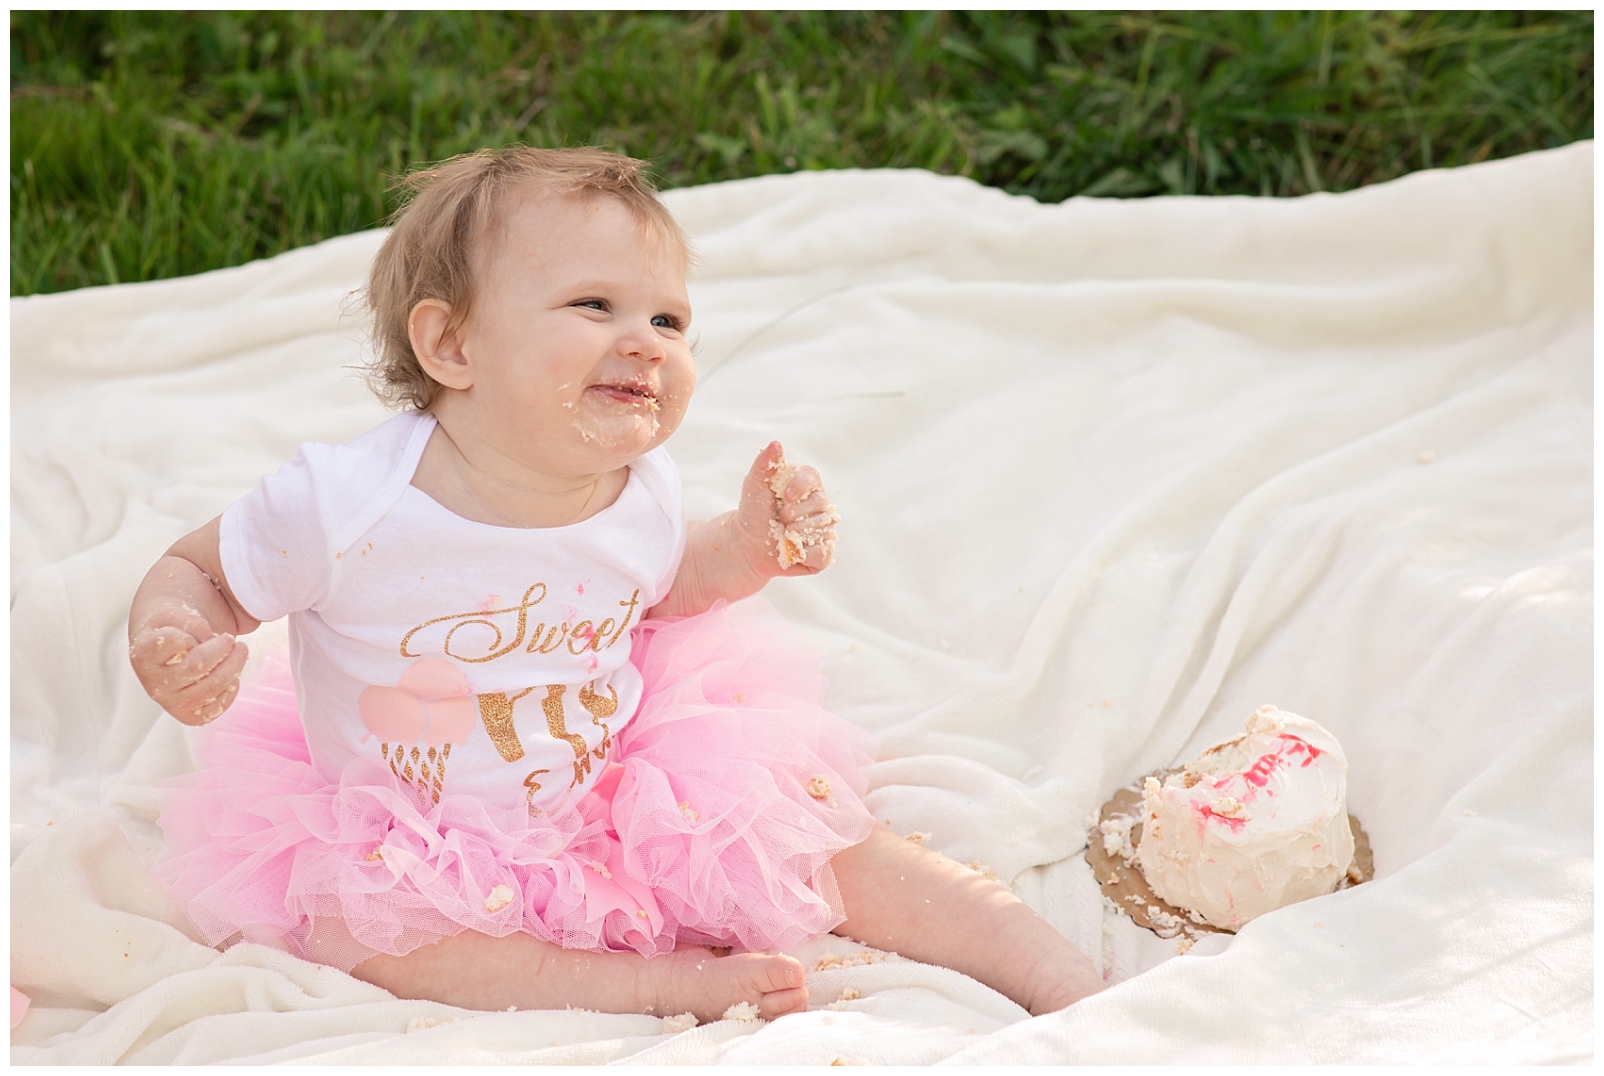 Baby girl wearing a pink tutu dress eating a birthday cake